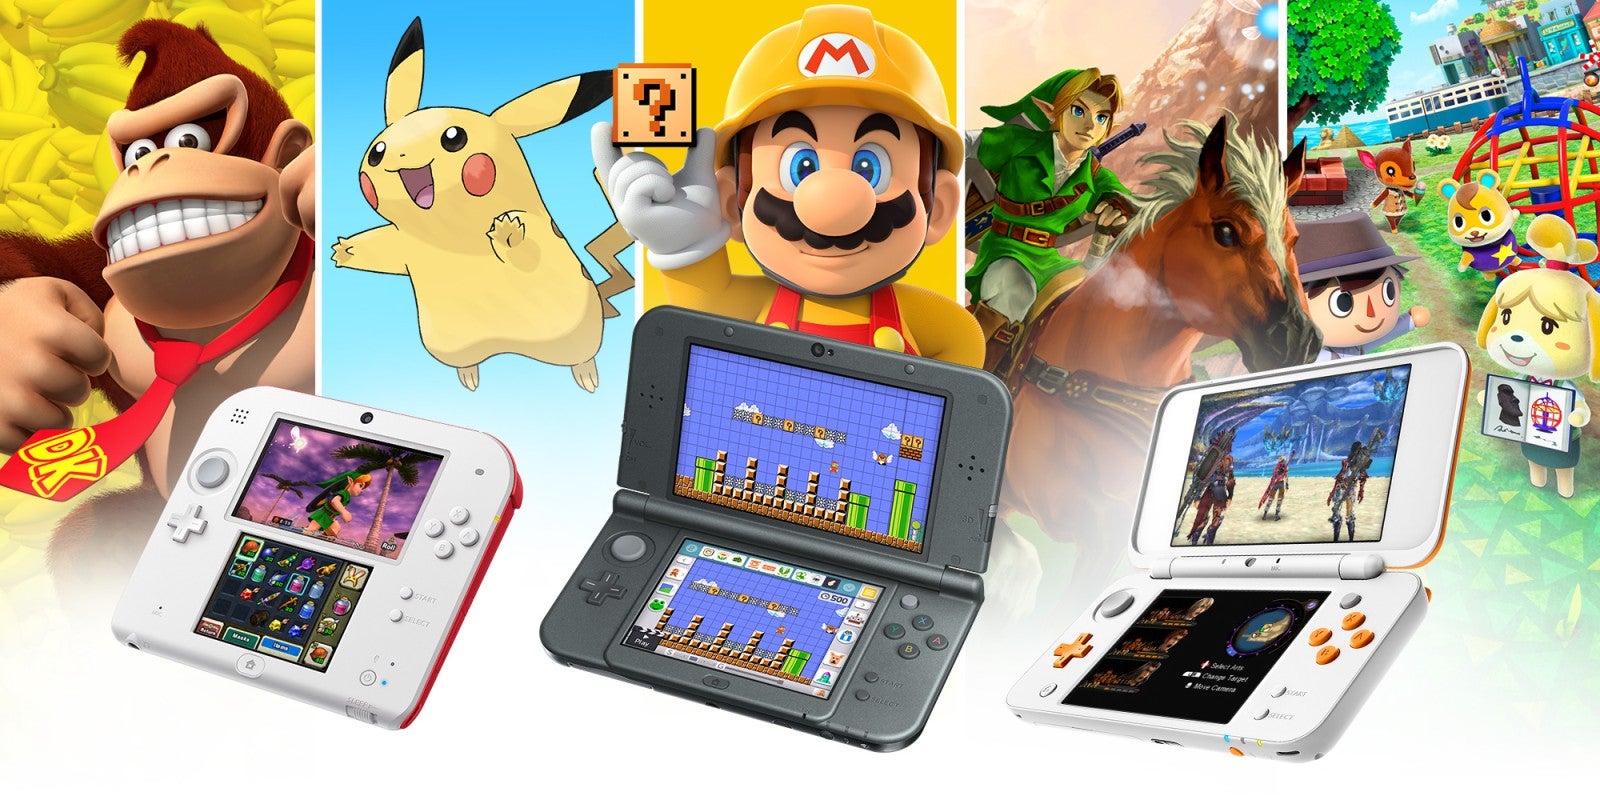 Obrazki dla Nintendo zamyka eShop na 3DS i Wii U